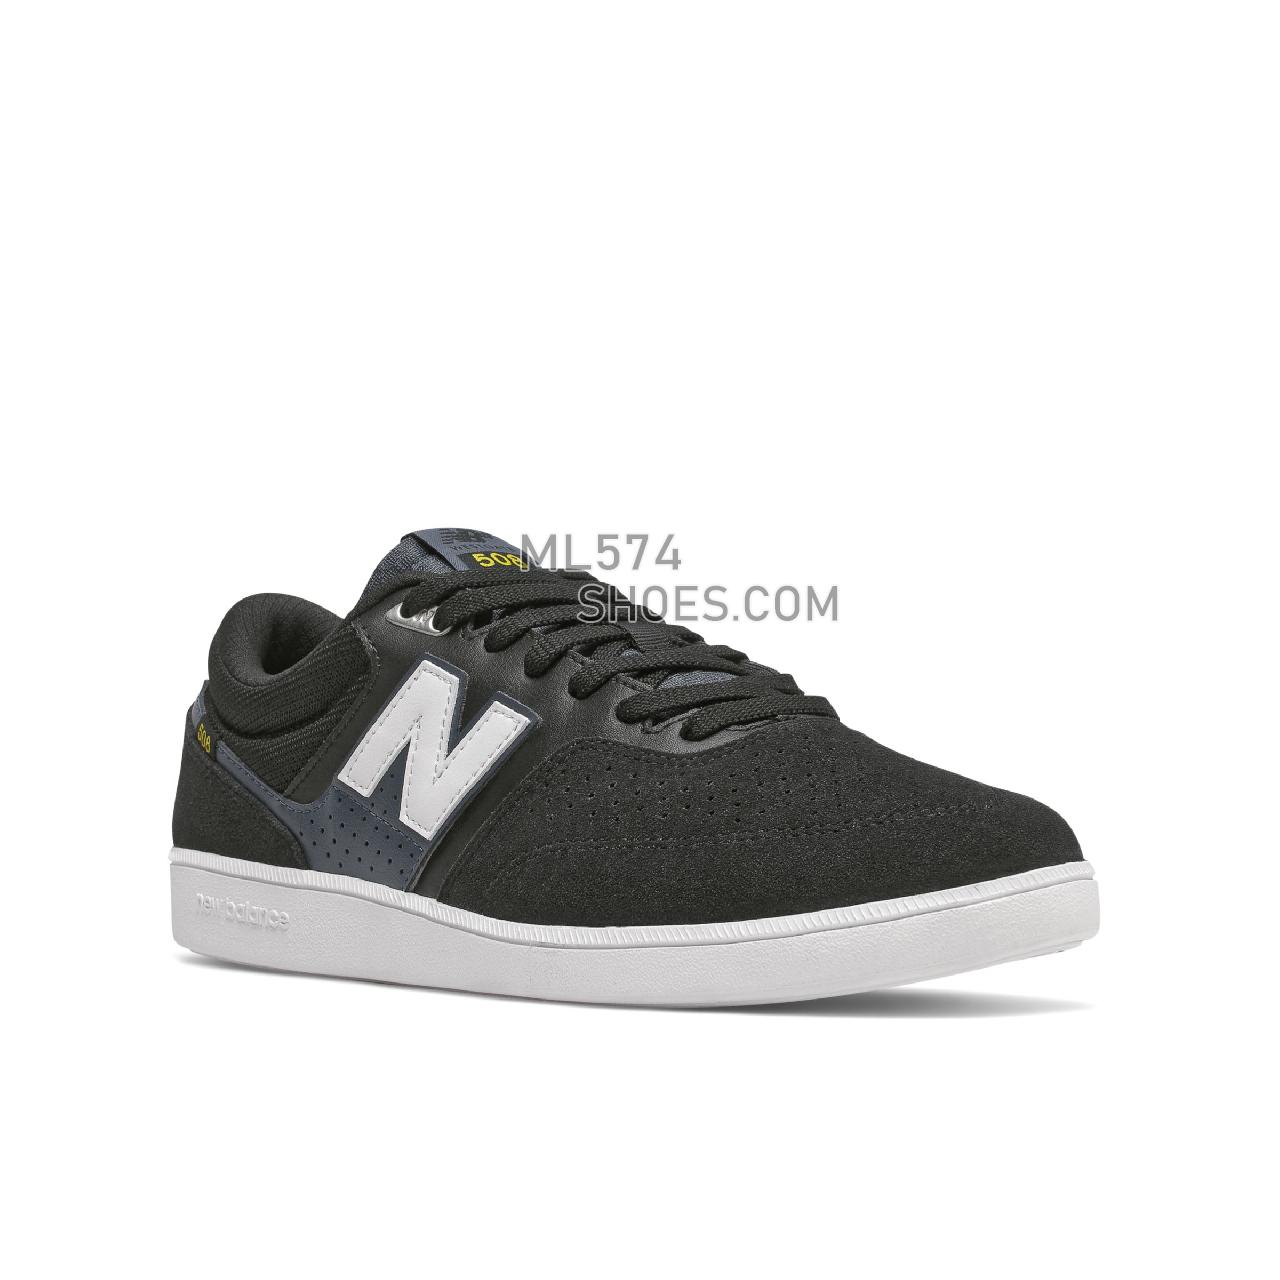 New Balance NB NUMERIC BRANDON WESTGATE 508 - Men's NB Numeric Skate - Black with Navy - NM508NOB